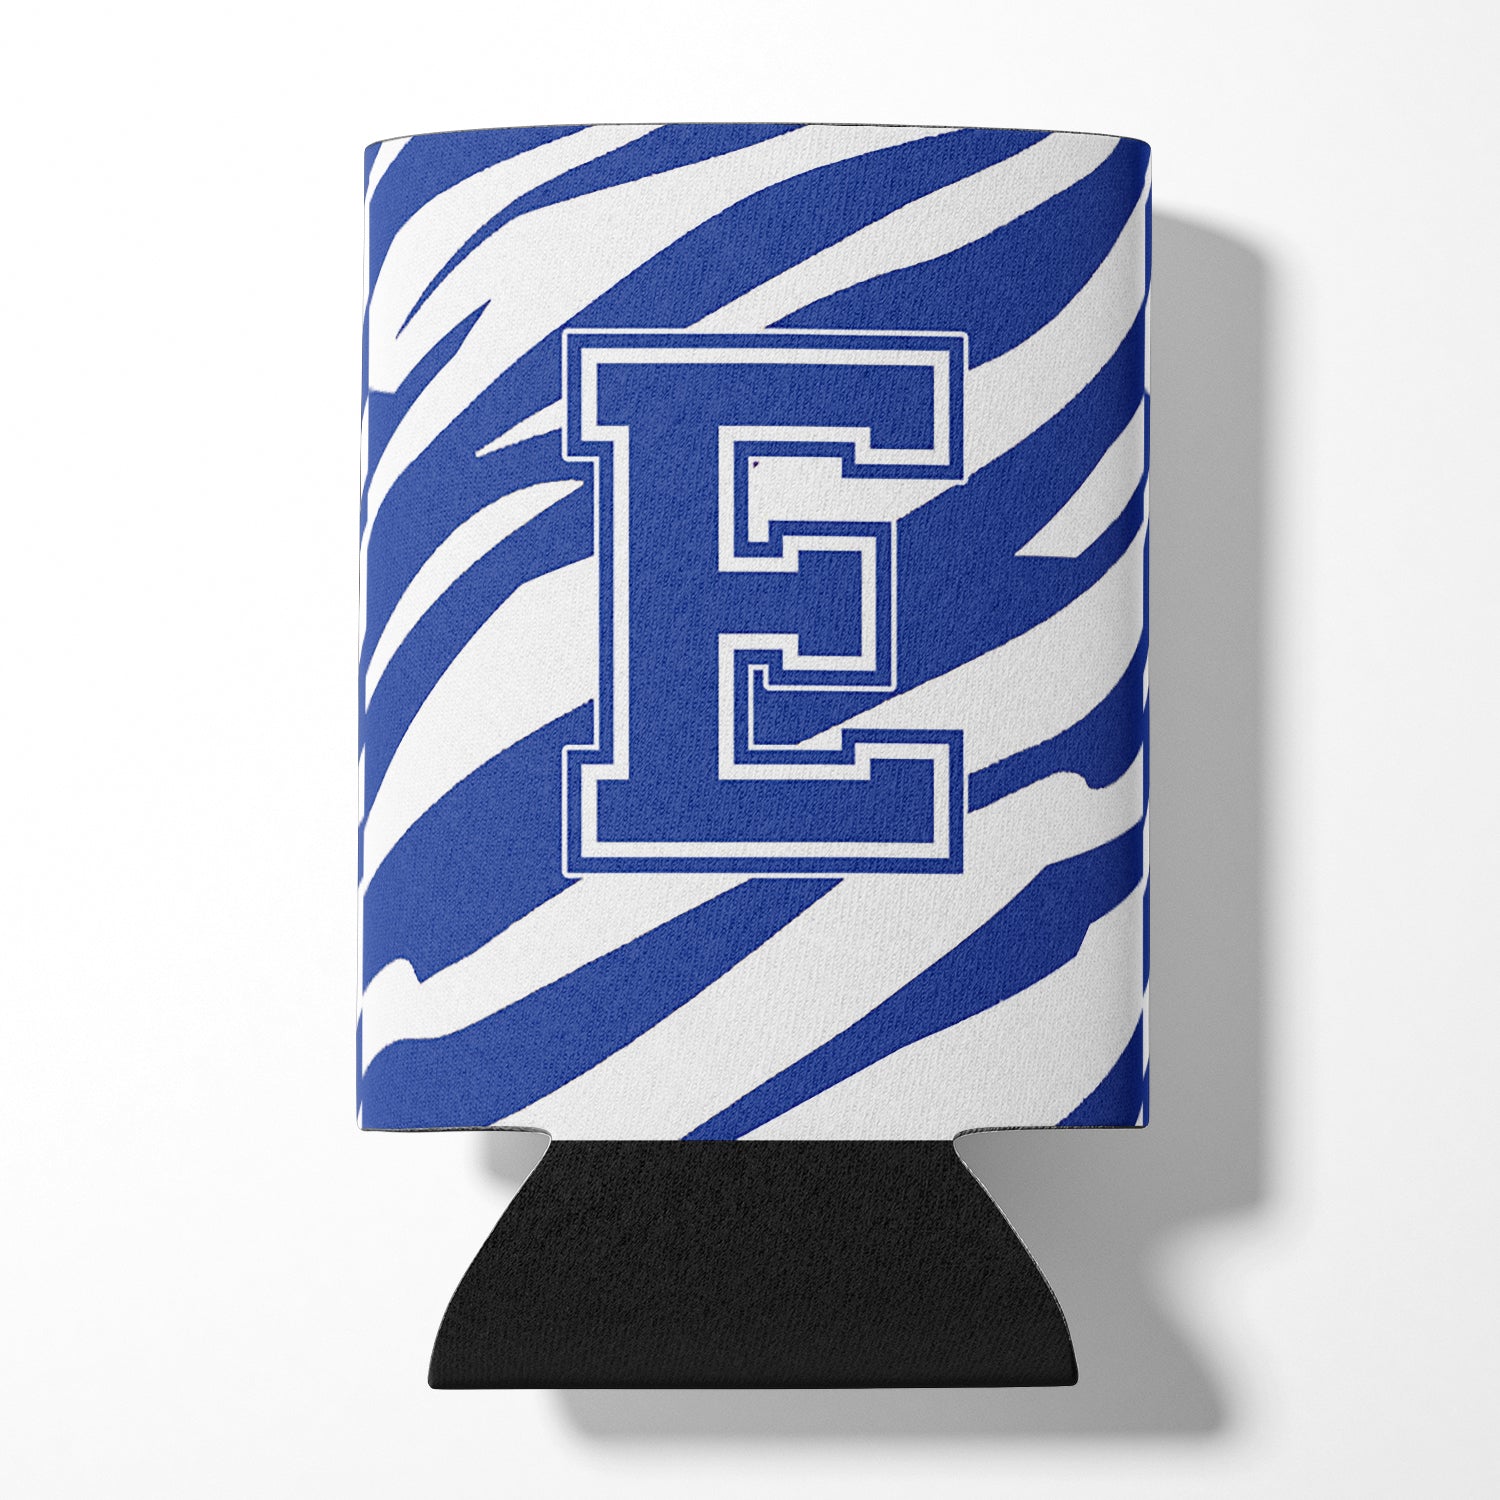 Letter E Initial Monogram - Tiger Stripe Blue and White Can Beverage Insulator Hugger.